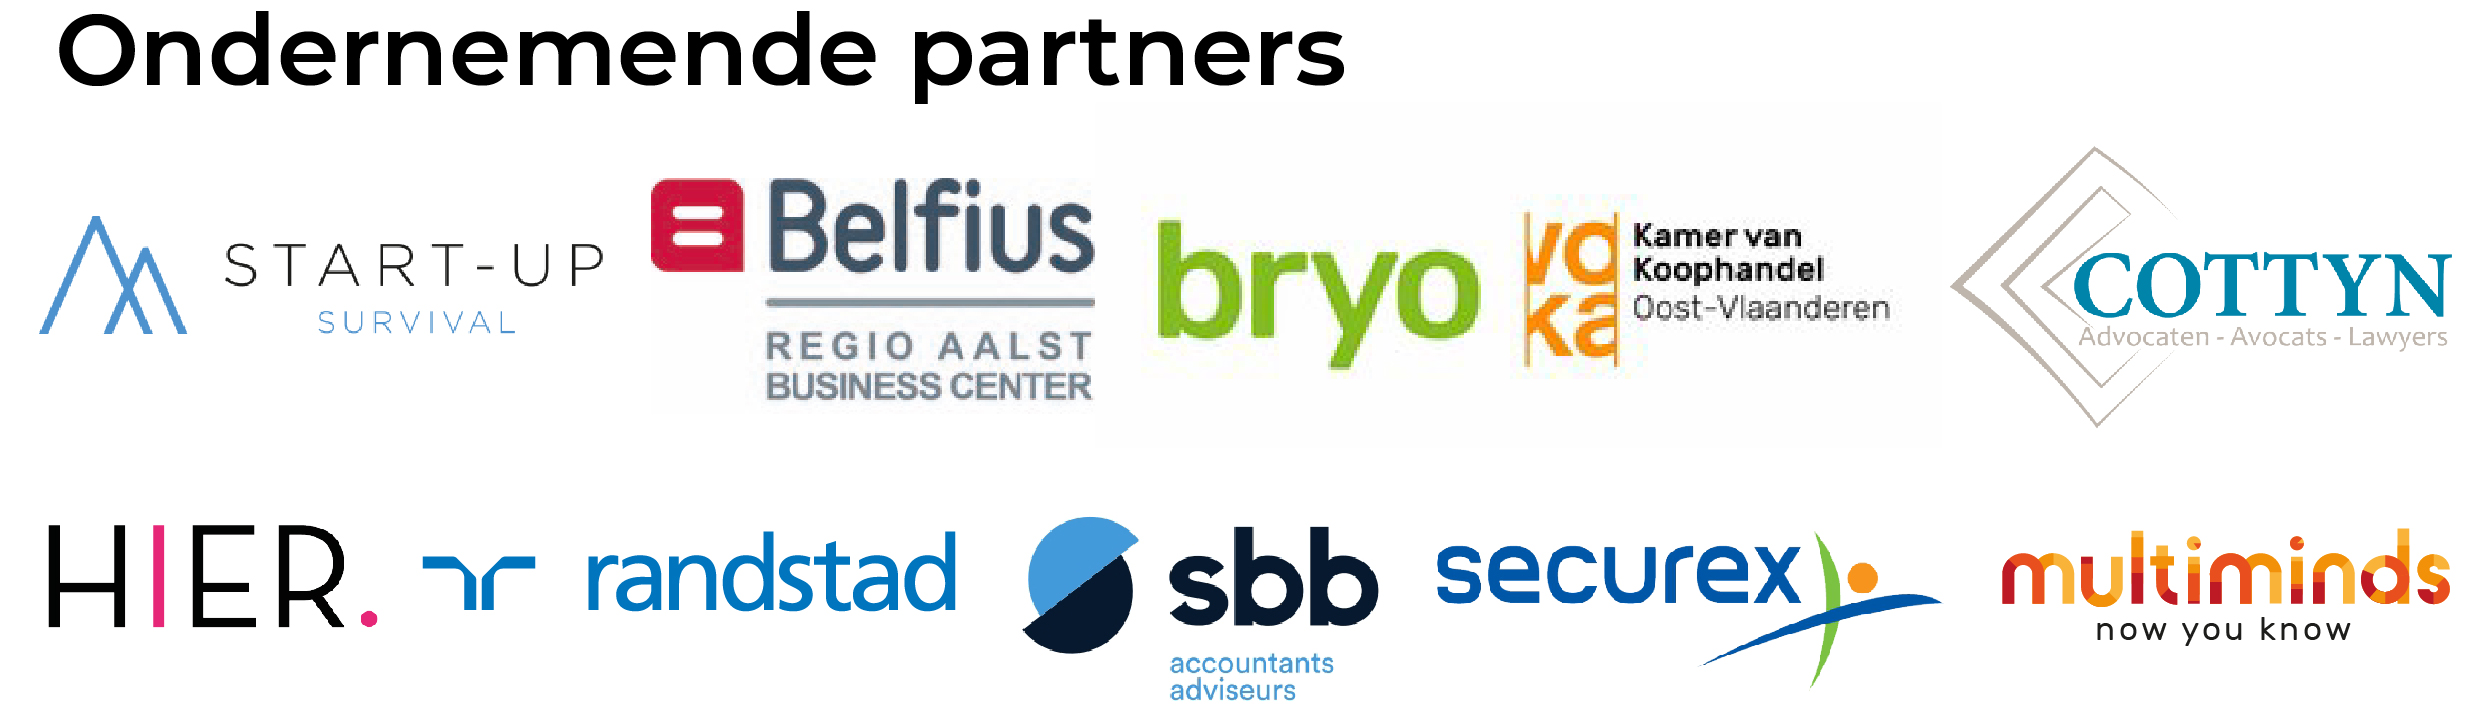 Banner met logo's ondernemende partners